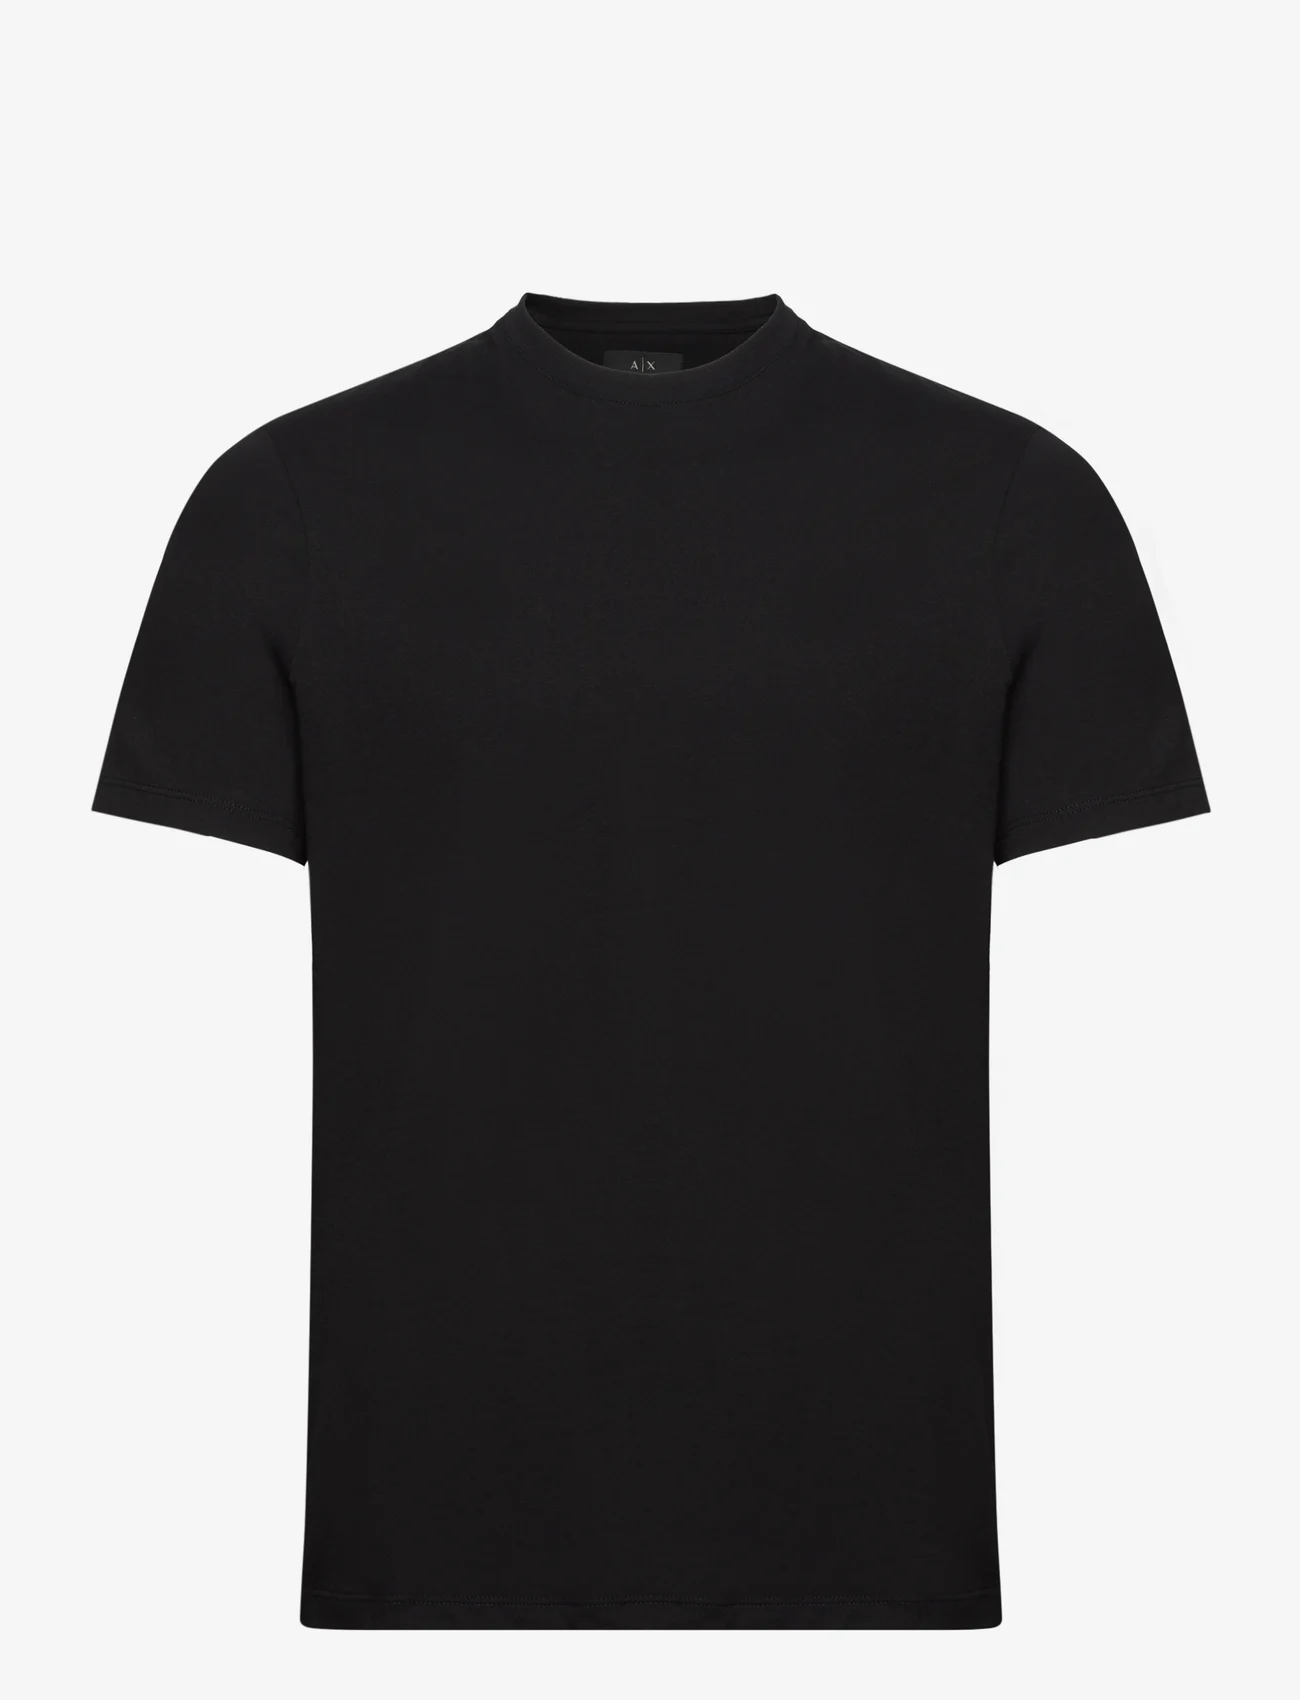 Armani Exchange - T-SHIRT - kortærmede t-shirts - 1200-black - 0